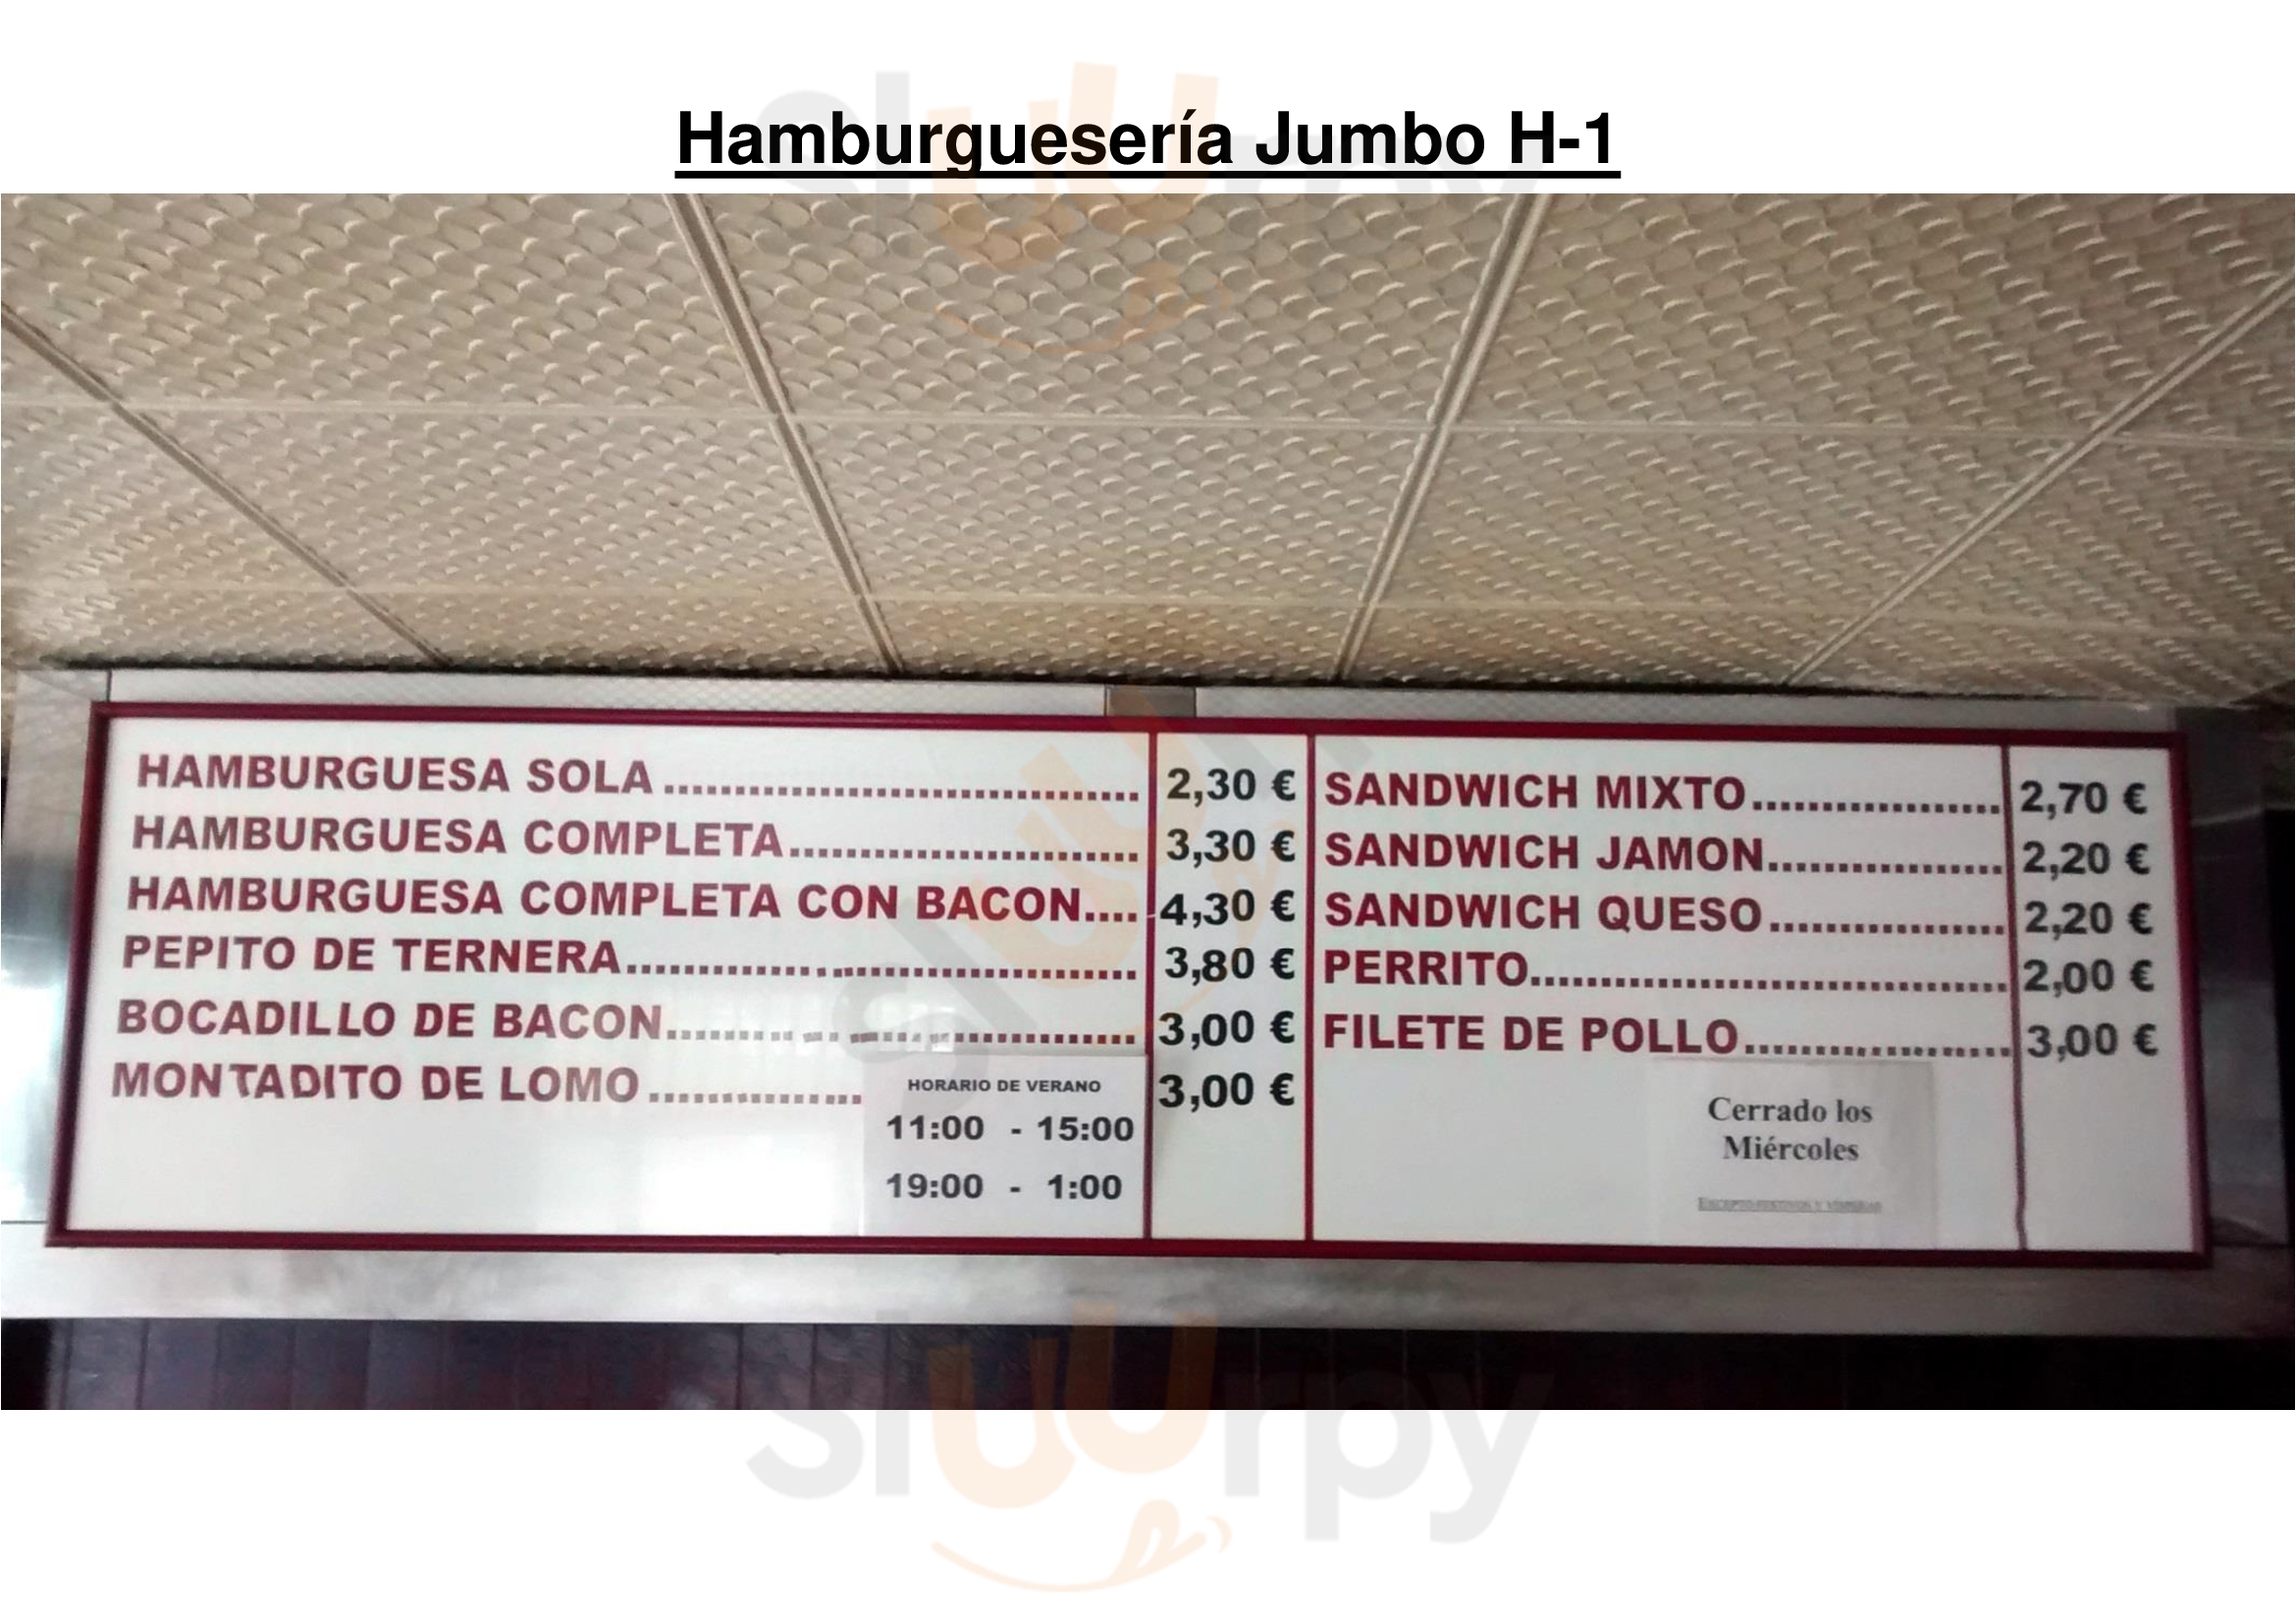 Hamburgueseria Jumbo H-1 A Coruña Menu - 1